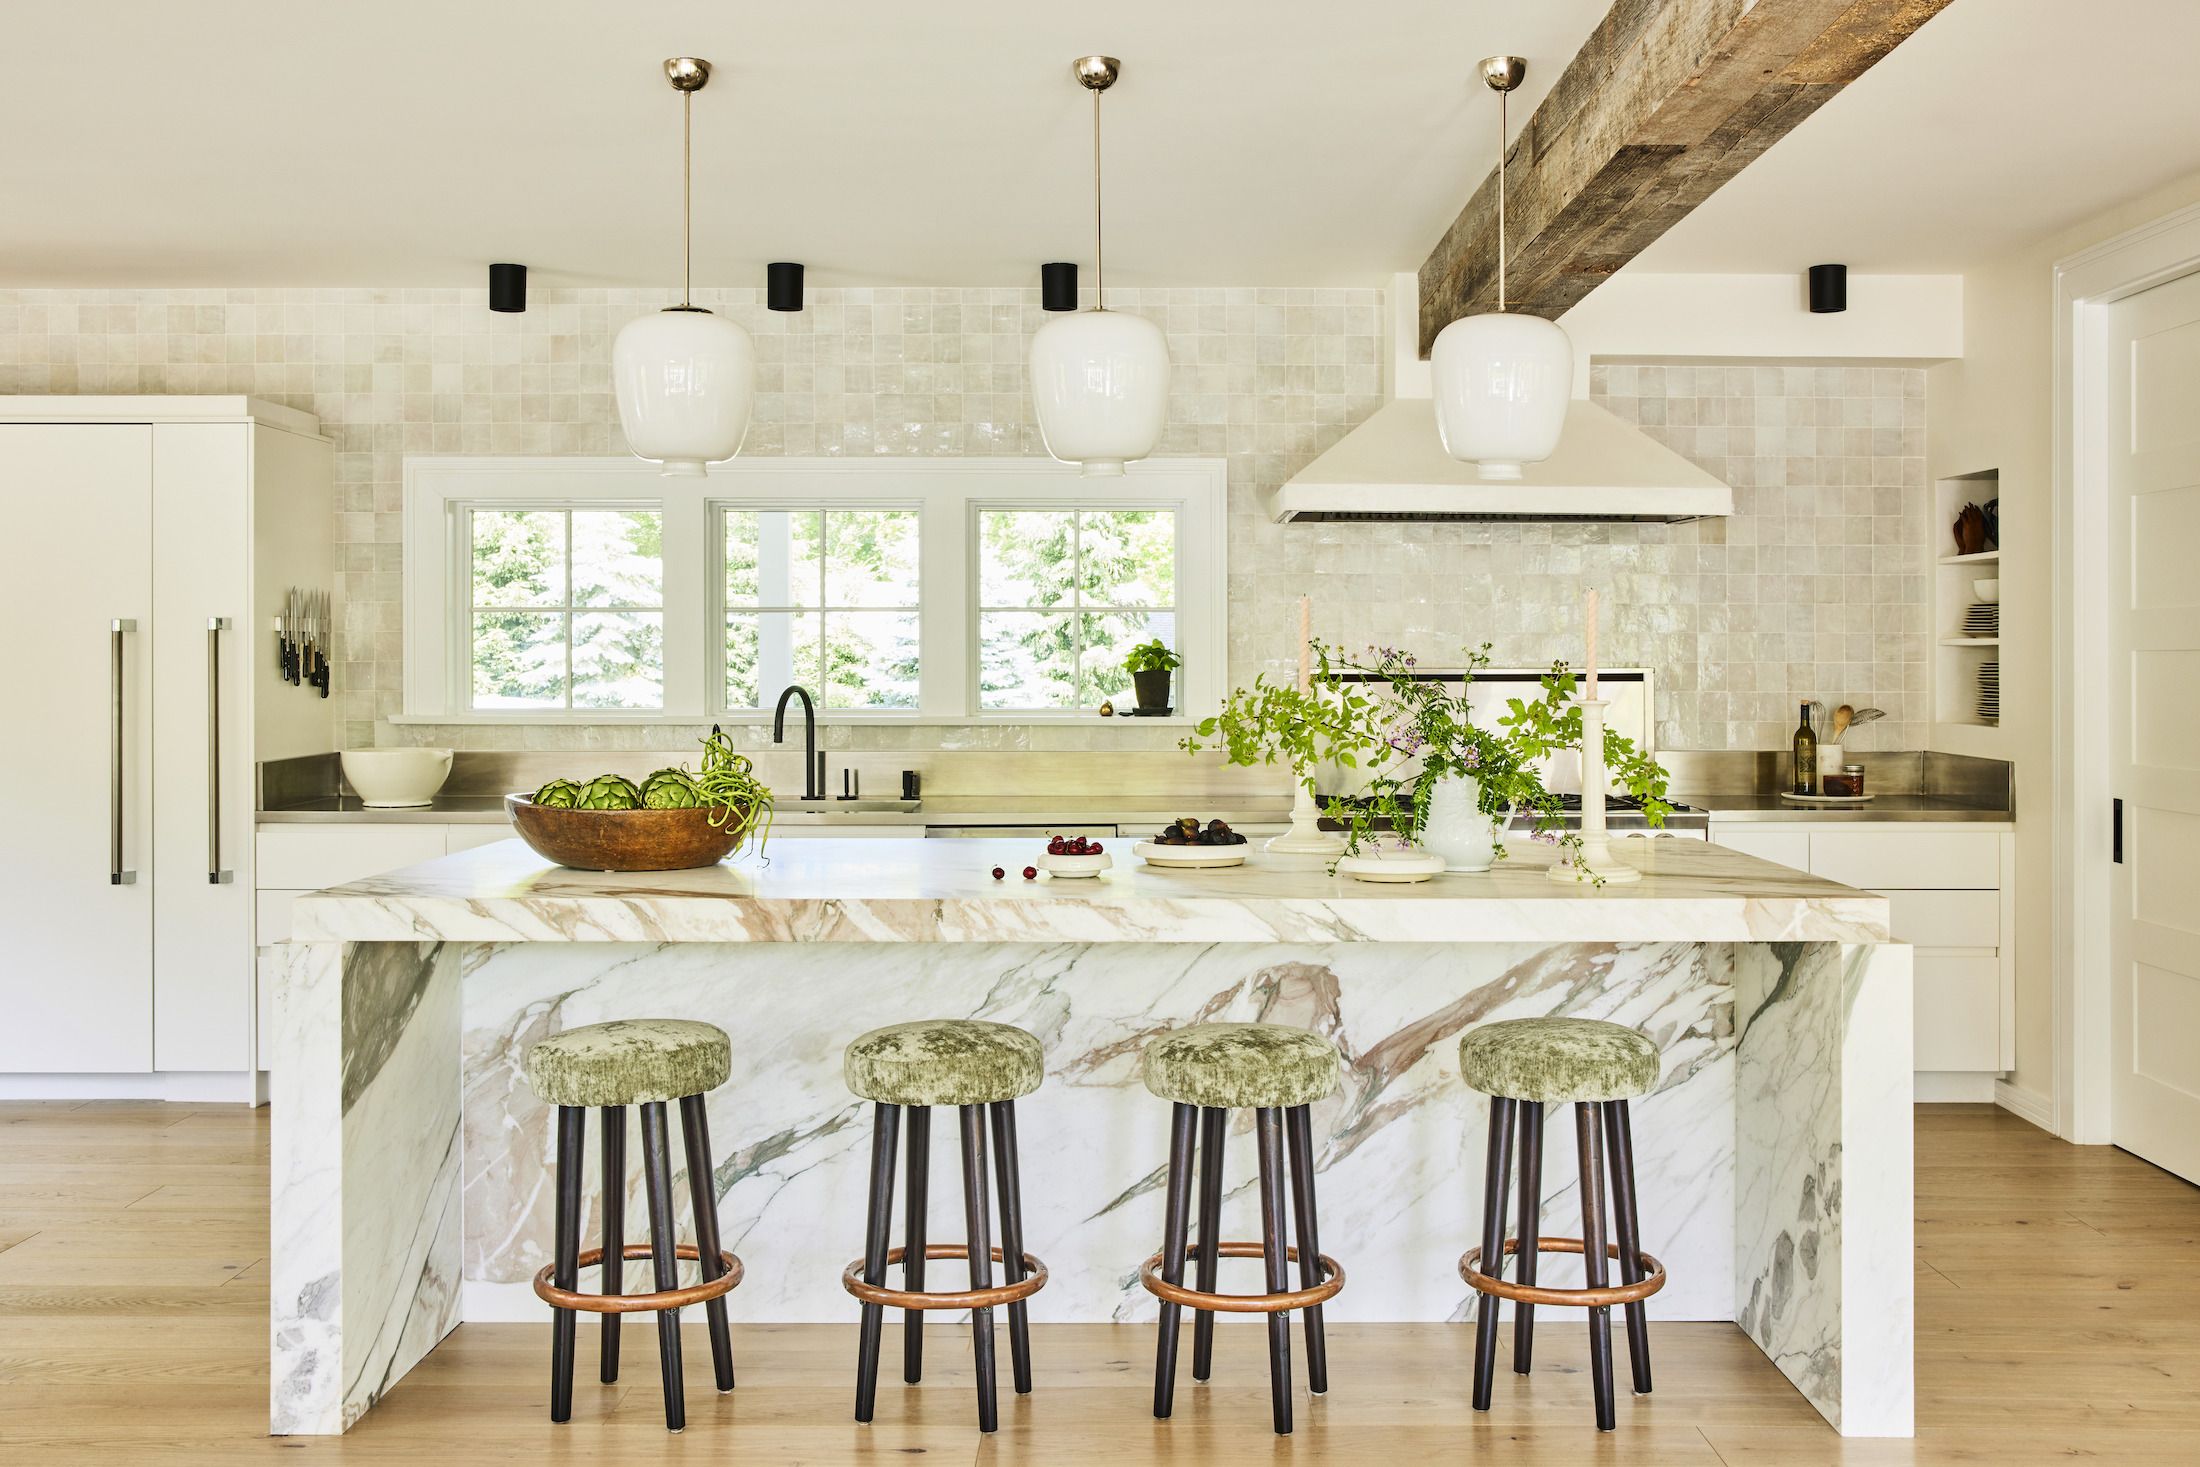 18 Kitchen Design Ideas   Remodeling Ideas for Interior Design